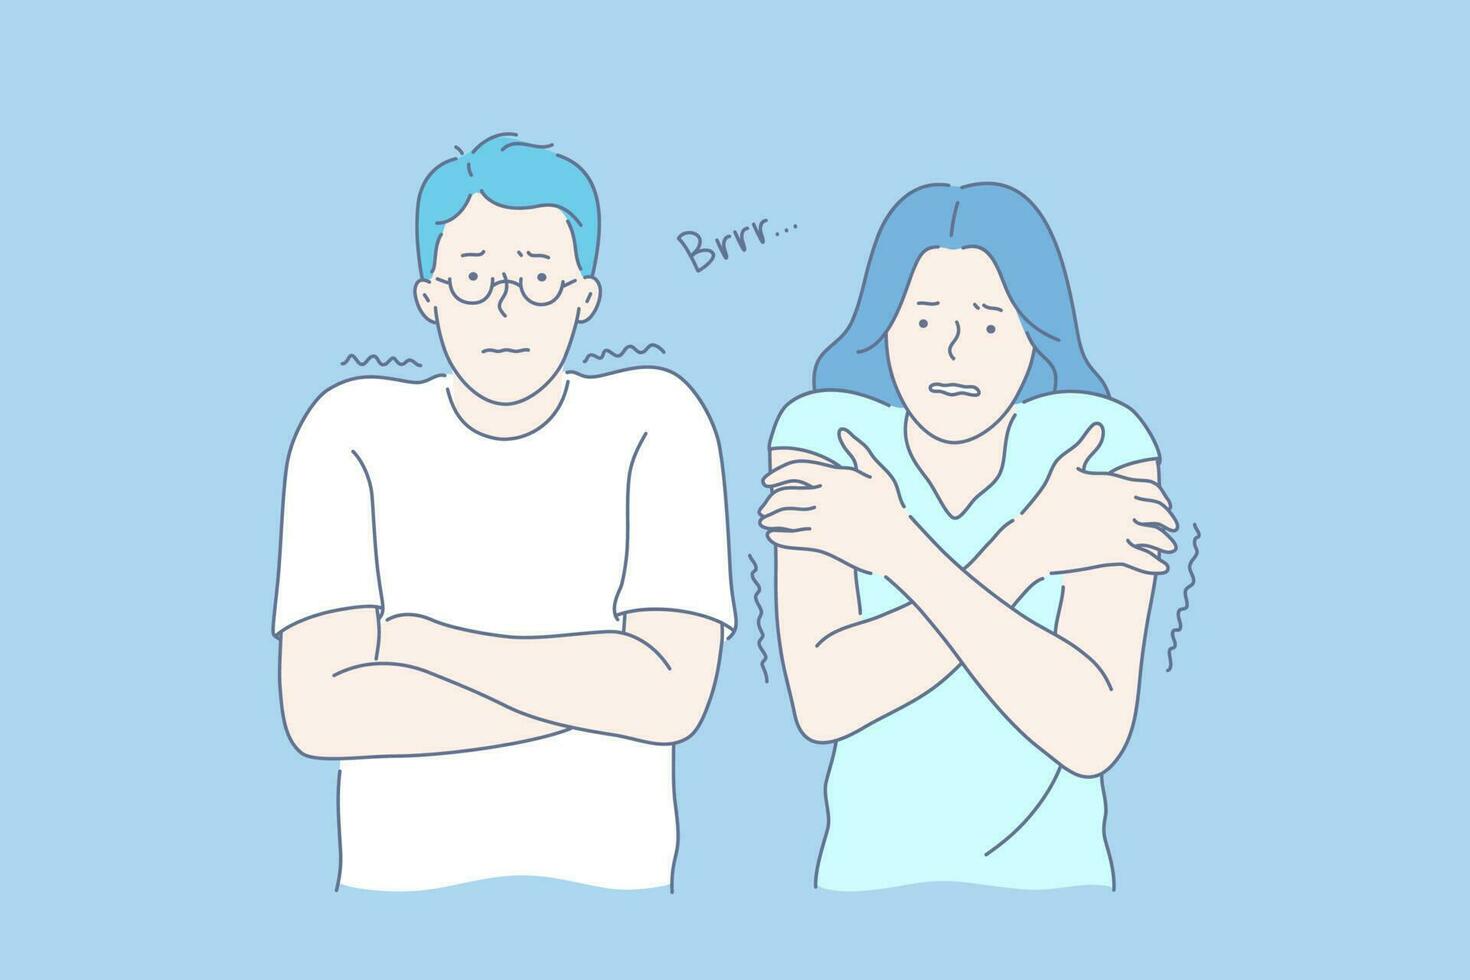 Frozen people hugging themselves, discomfort, negative emotions concept vector